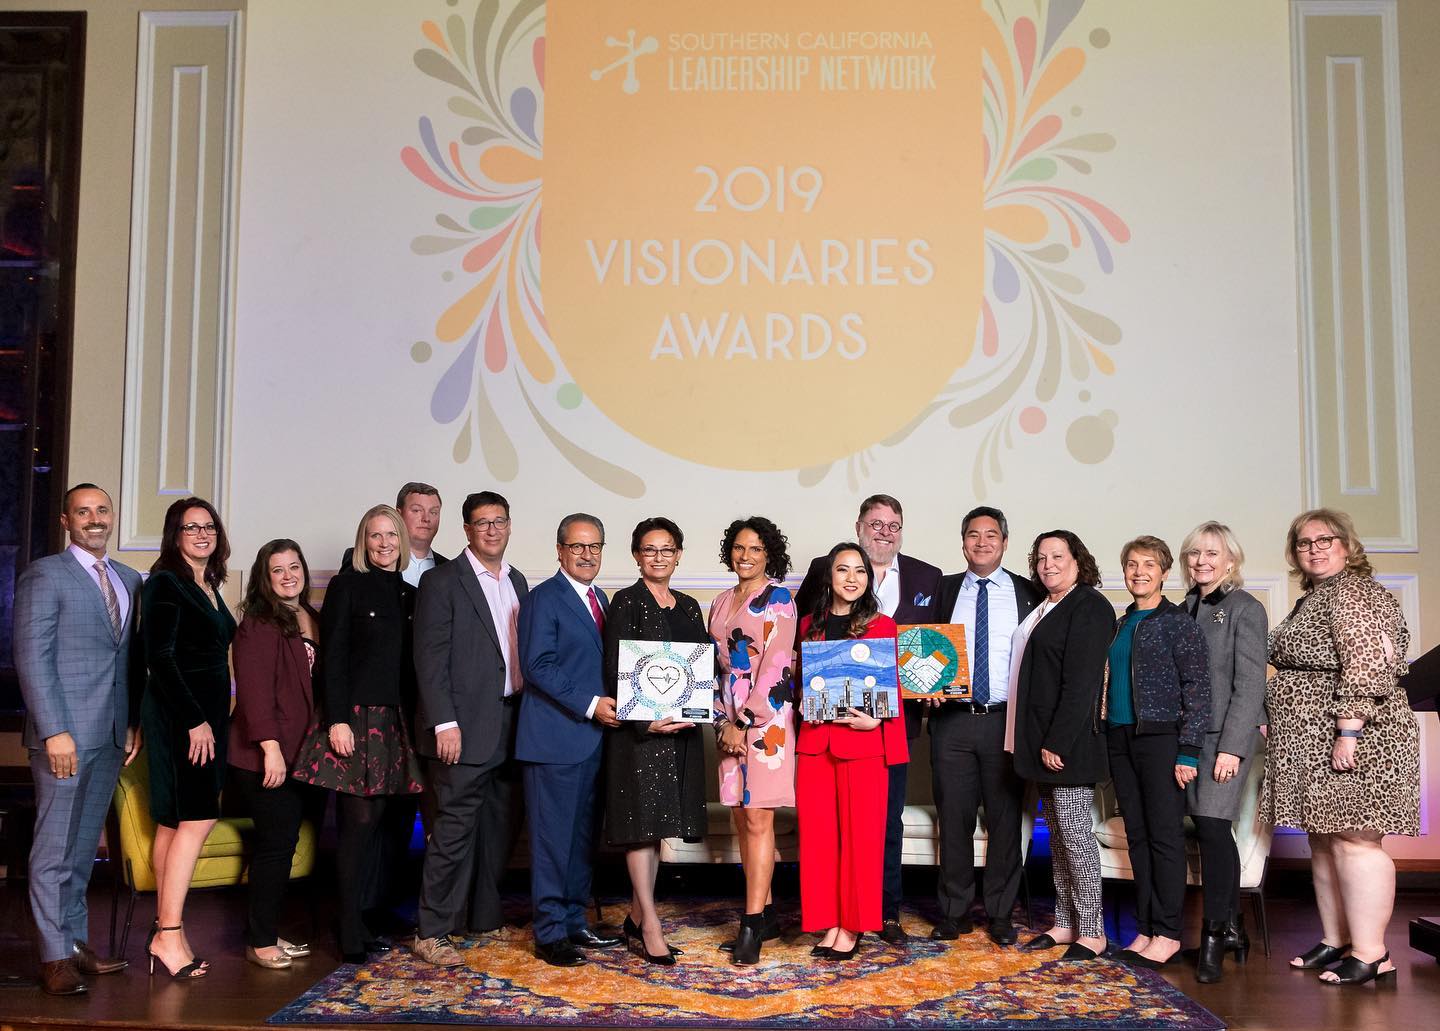 2019 Southern California Leadership Network Visionaries Awards Stage